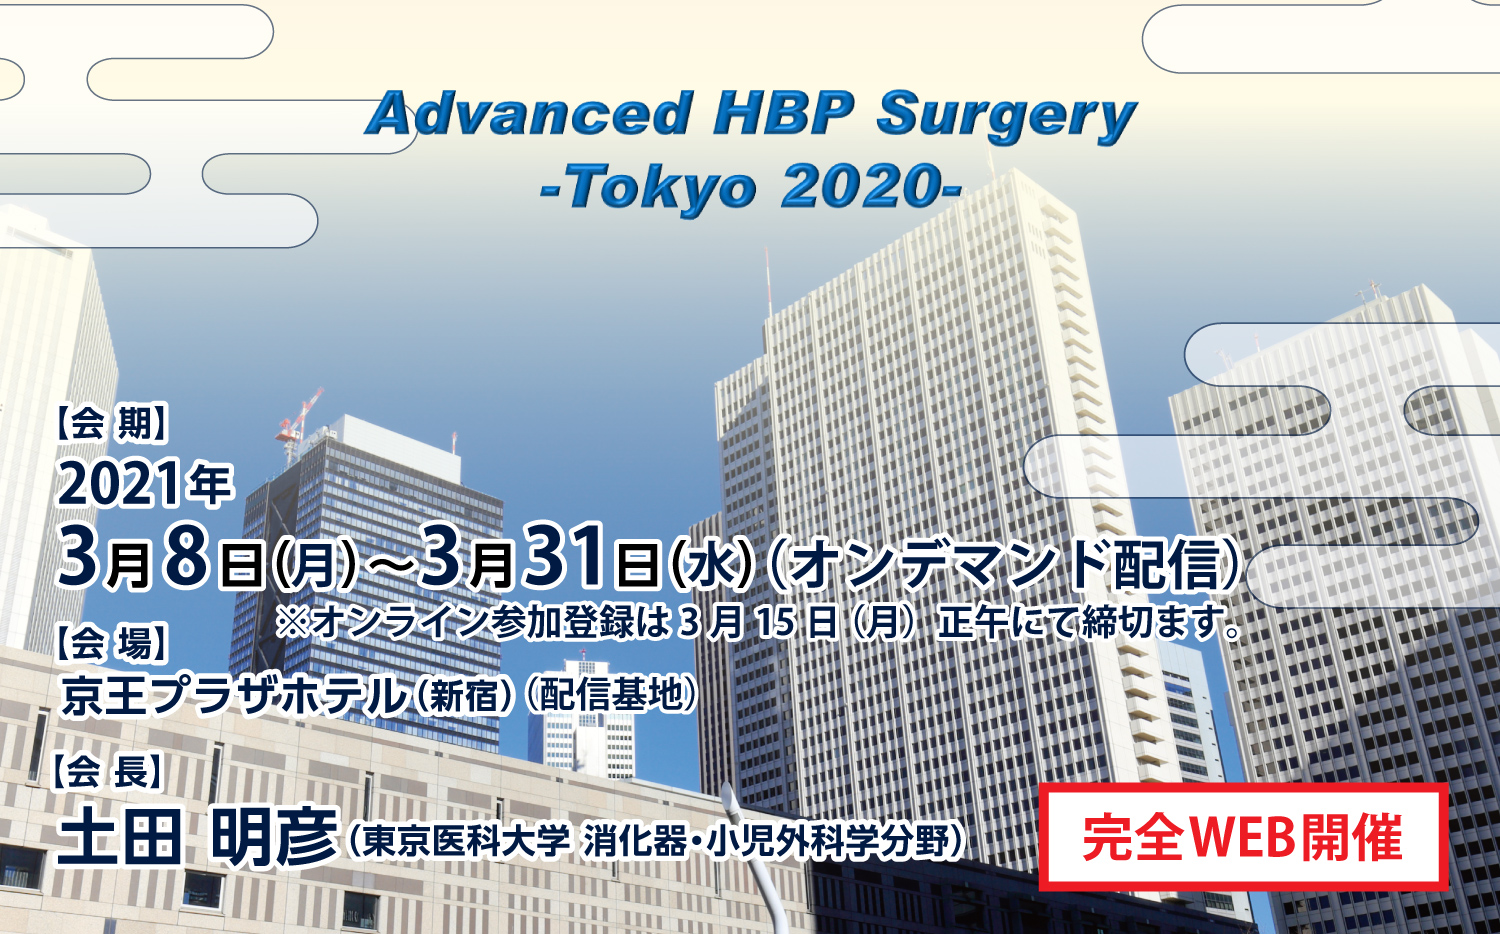 Advanced HBP Surgery
- Tokyo 2020 -
会期：2021年3月8日（月）～3月31日（水）（オンデマンド配信）
※オンライン参加登録は3月15日（月）正午にて締切ます。
会場：京王プラザホテル（新宿）（配信基地）
会長：土田　明彦（東京医科大学　消化器・小児外科学分野）
【完全WEB開催】